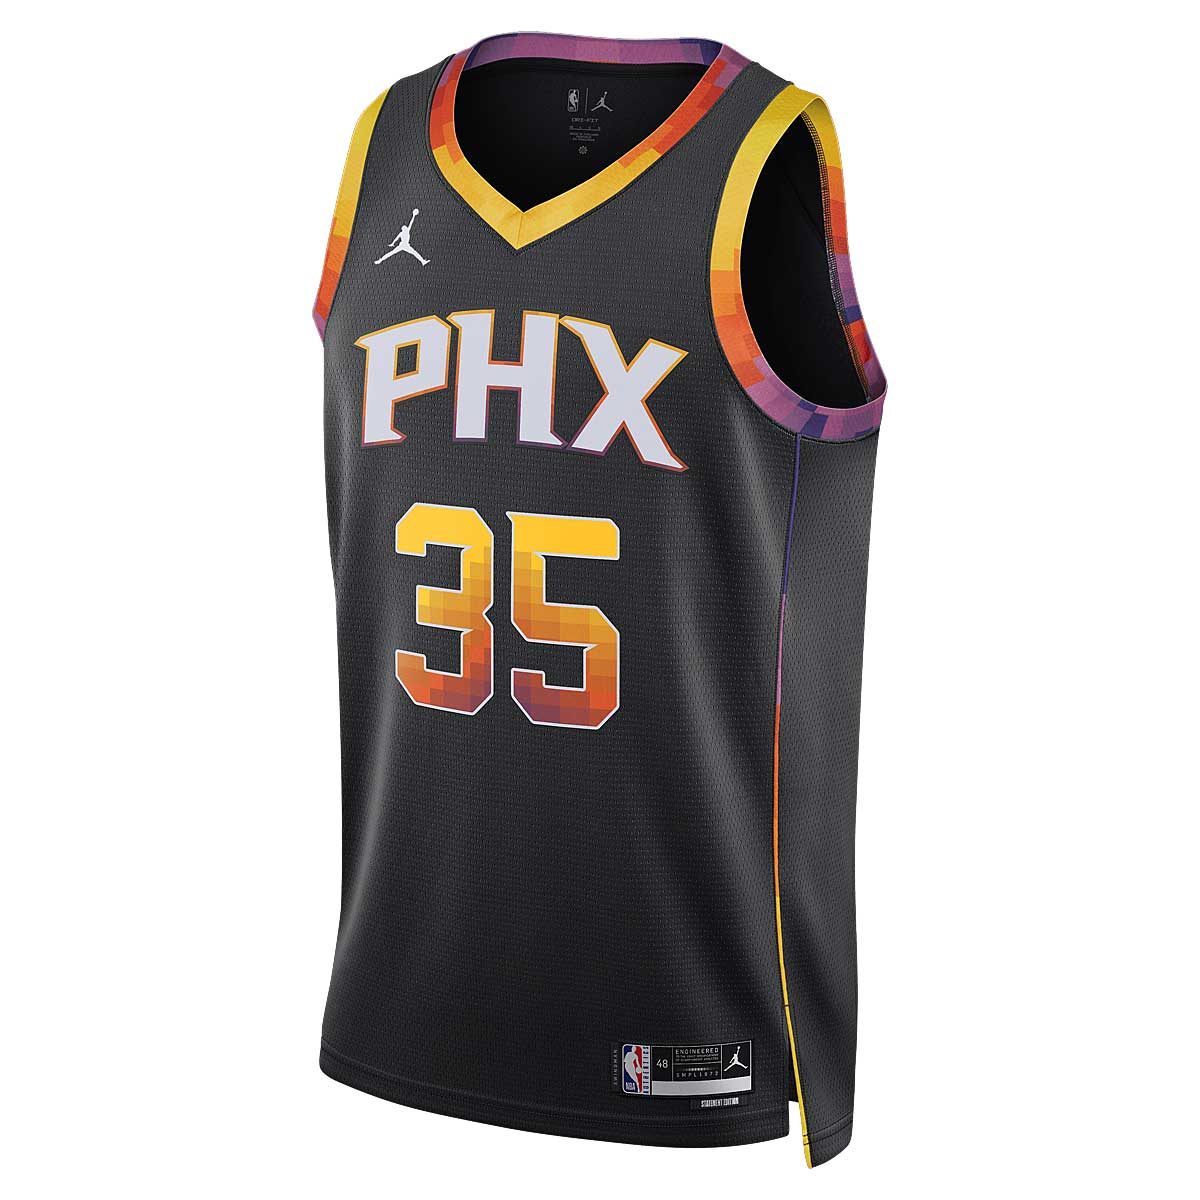 Phoenix Suns Essential Men's Nike NBA T-Shirt.